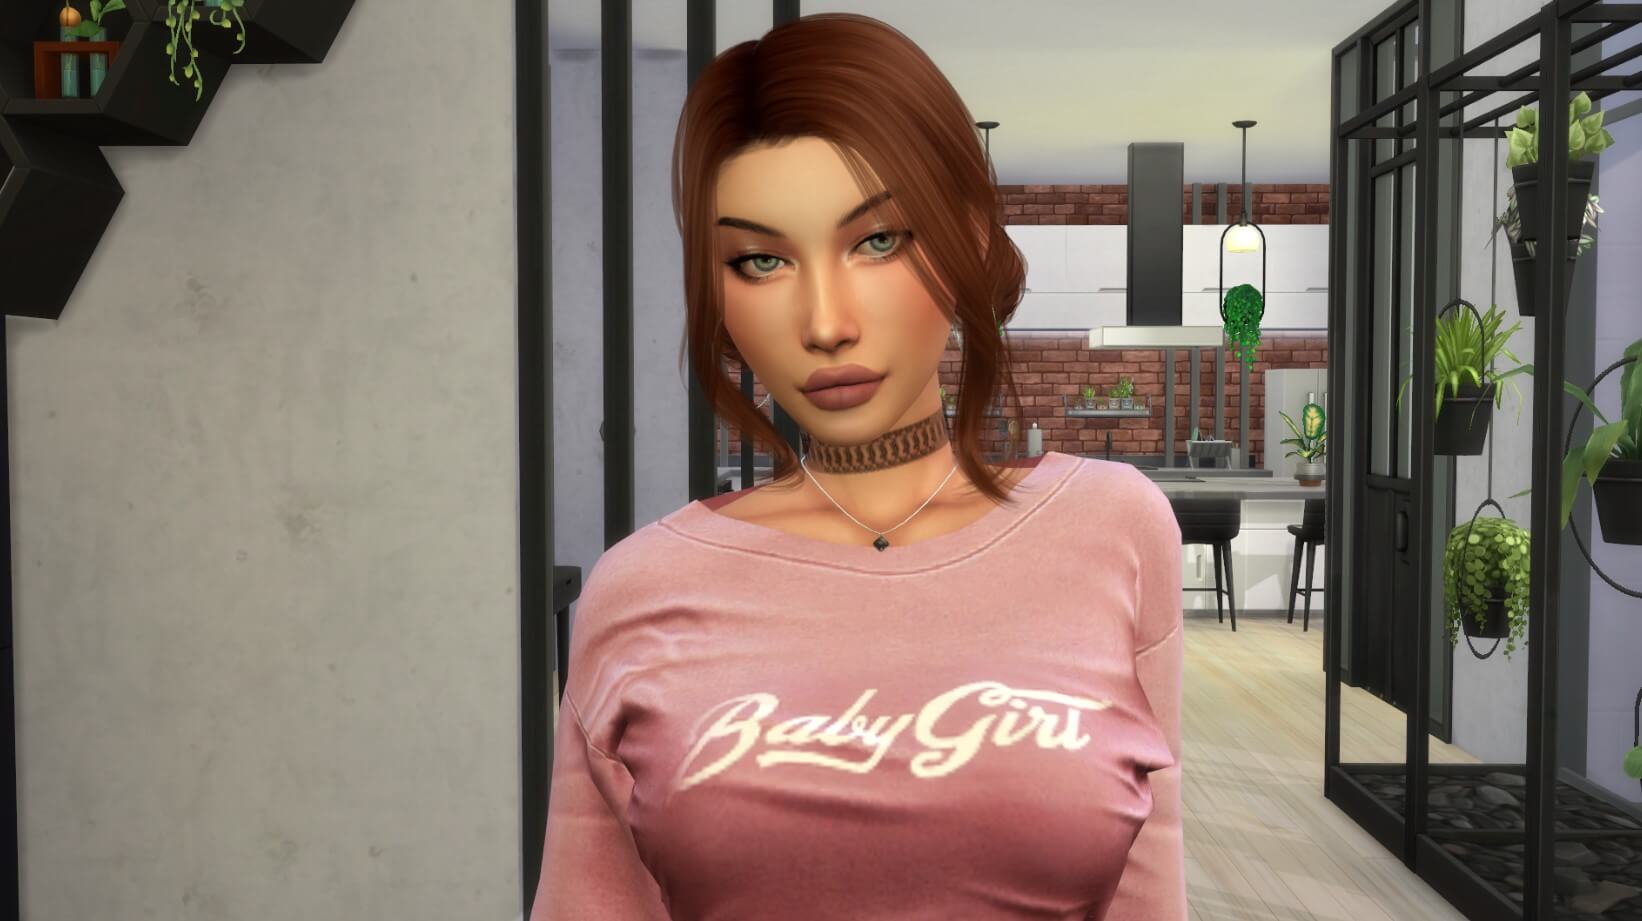 Allie Isaac - The Sims 4 / Sim Models | The Sims 4